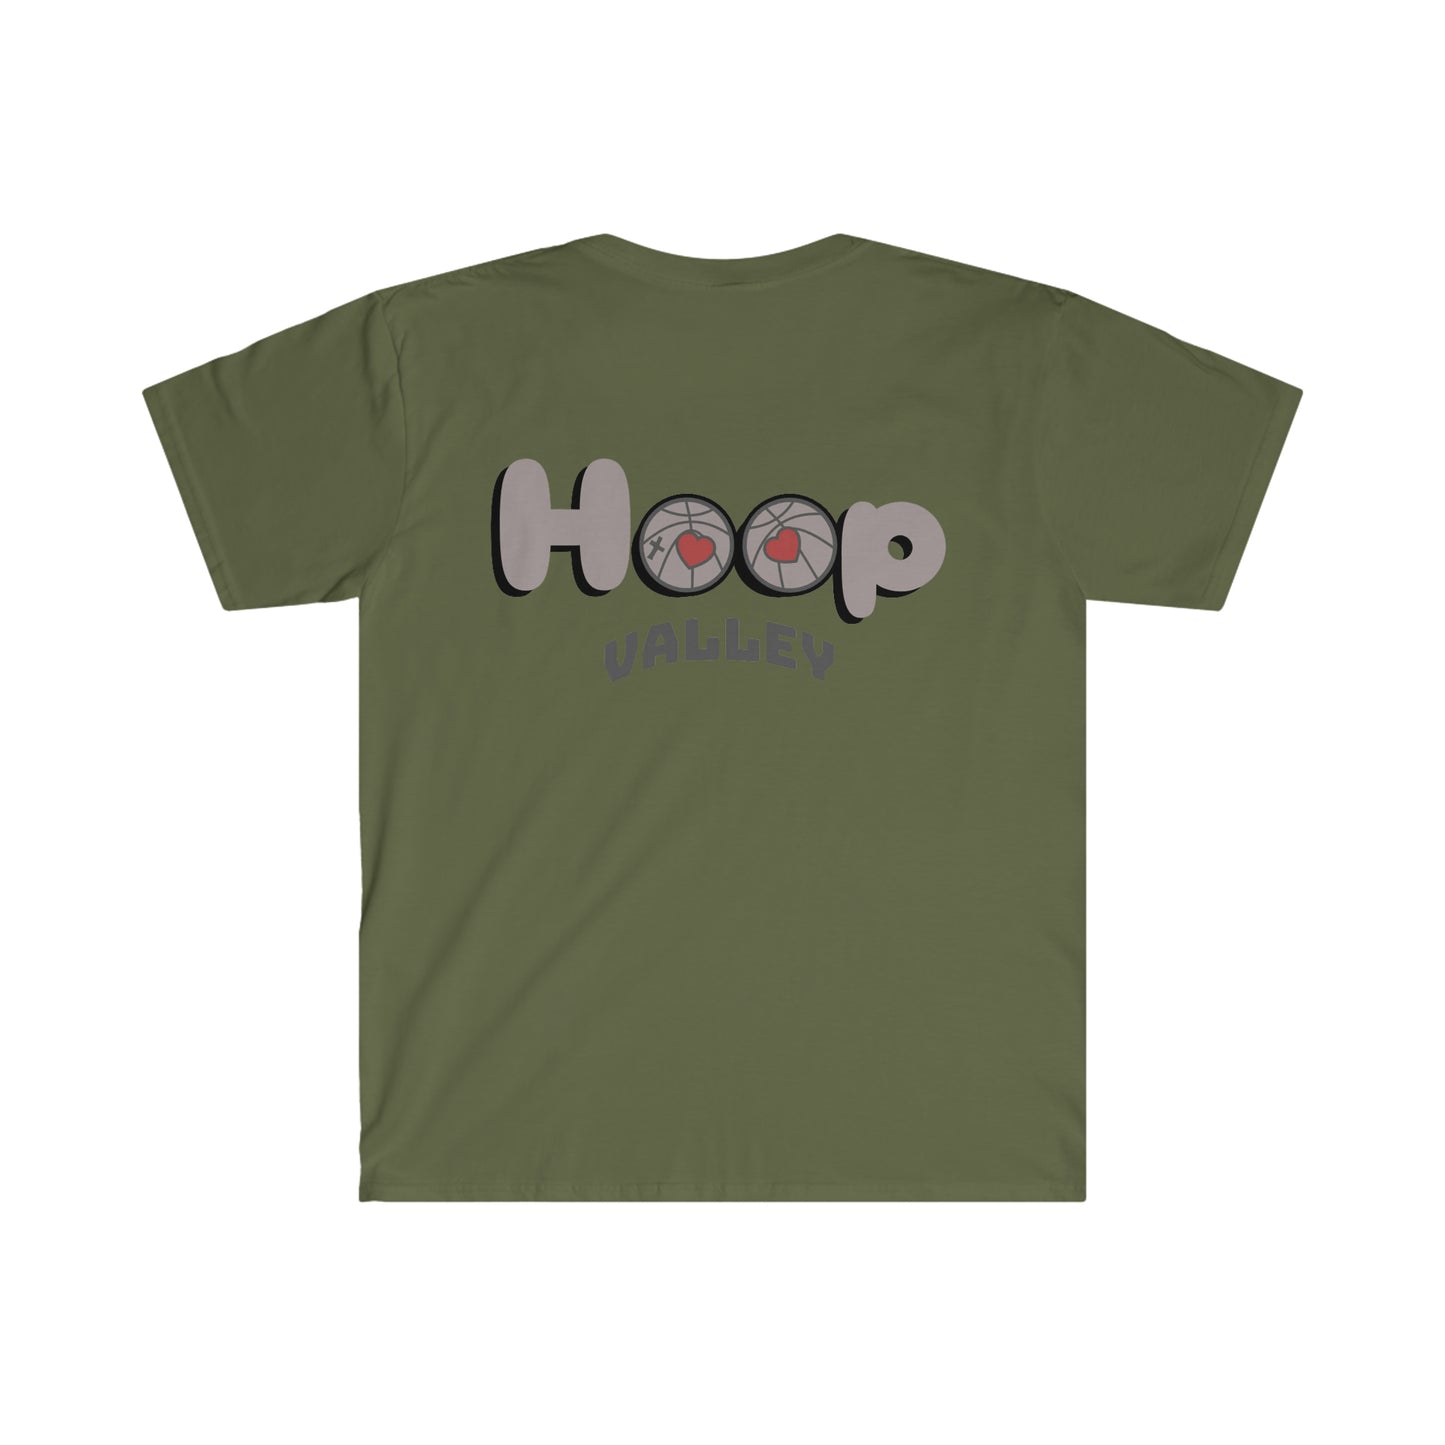 Hoop Valley Chocolate Brown Logo T-Shirts